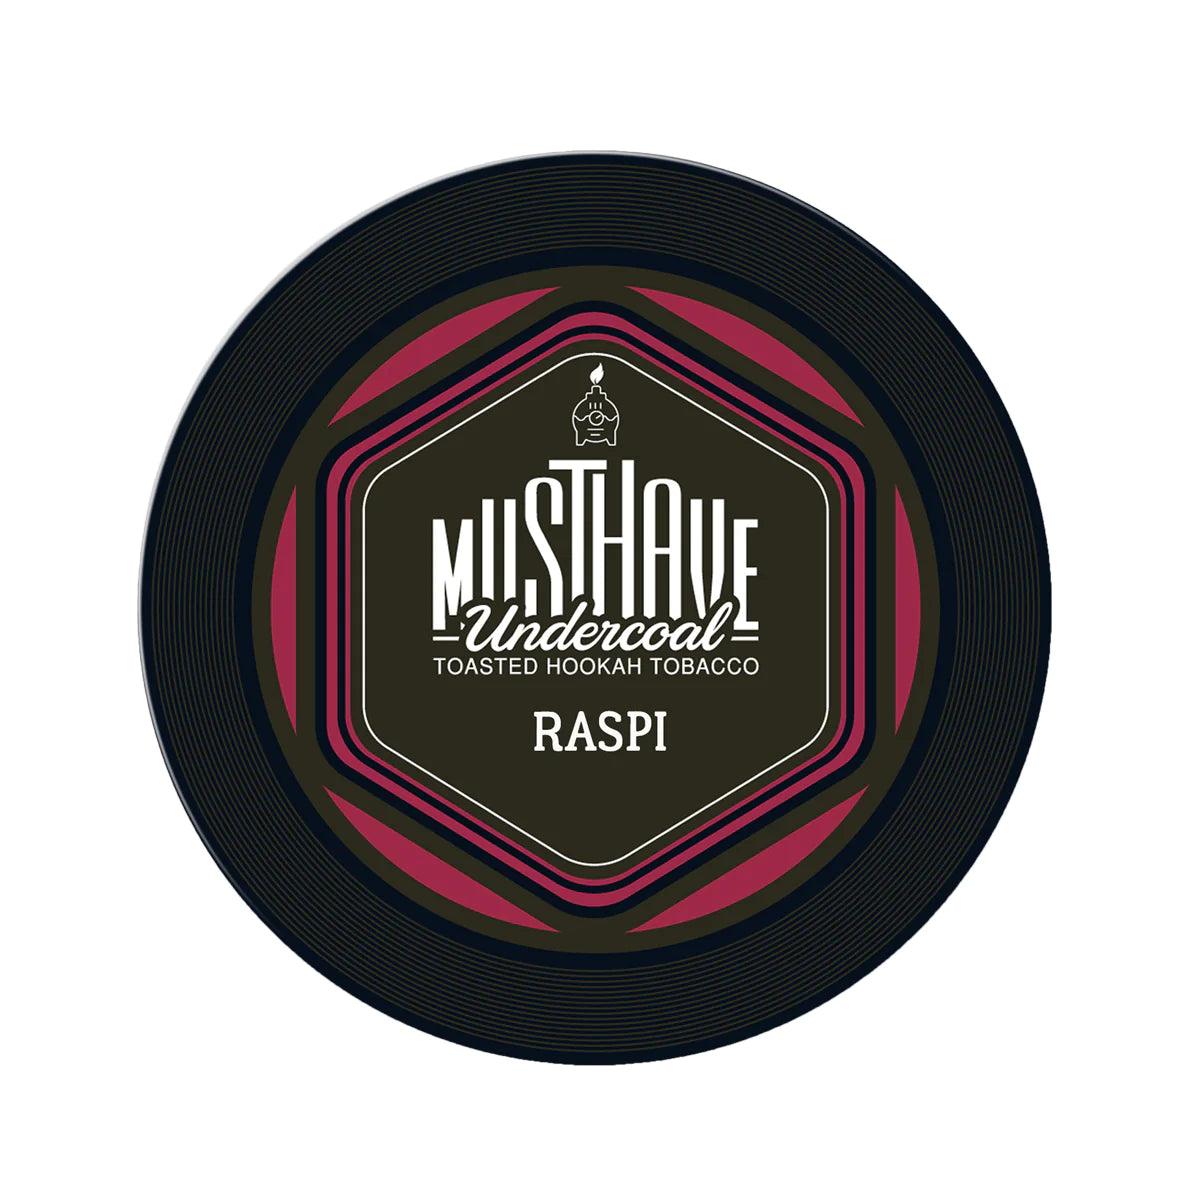 Musthave 25g - Raspi - Dschinni GmbH